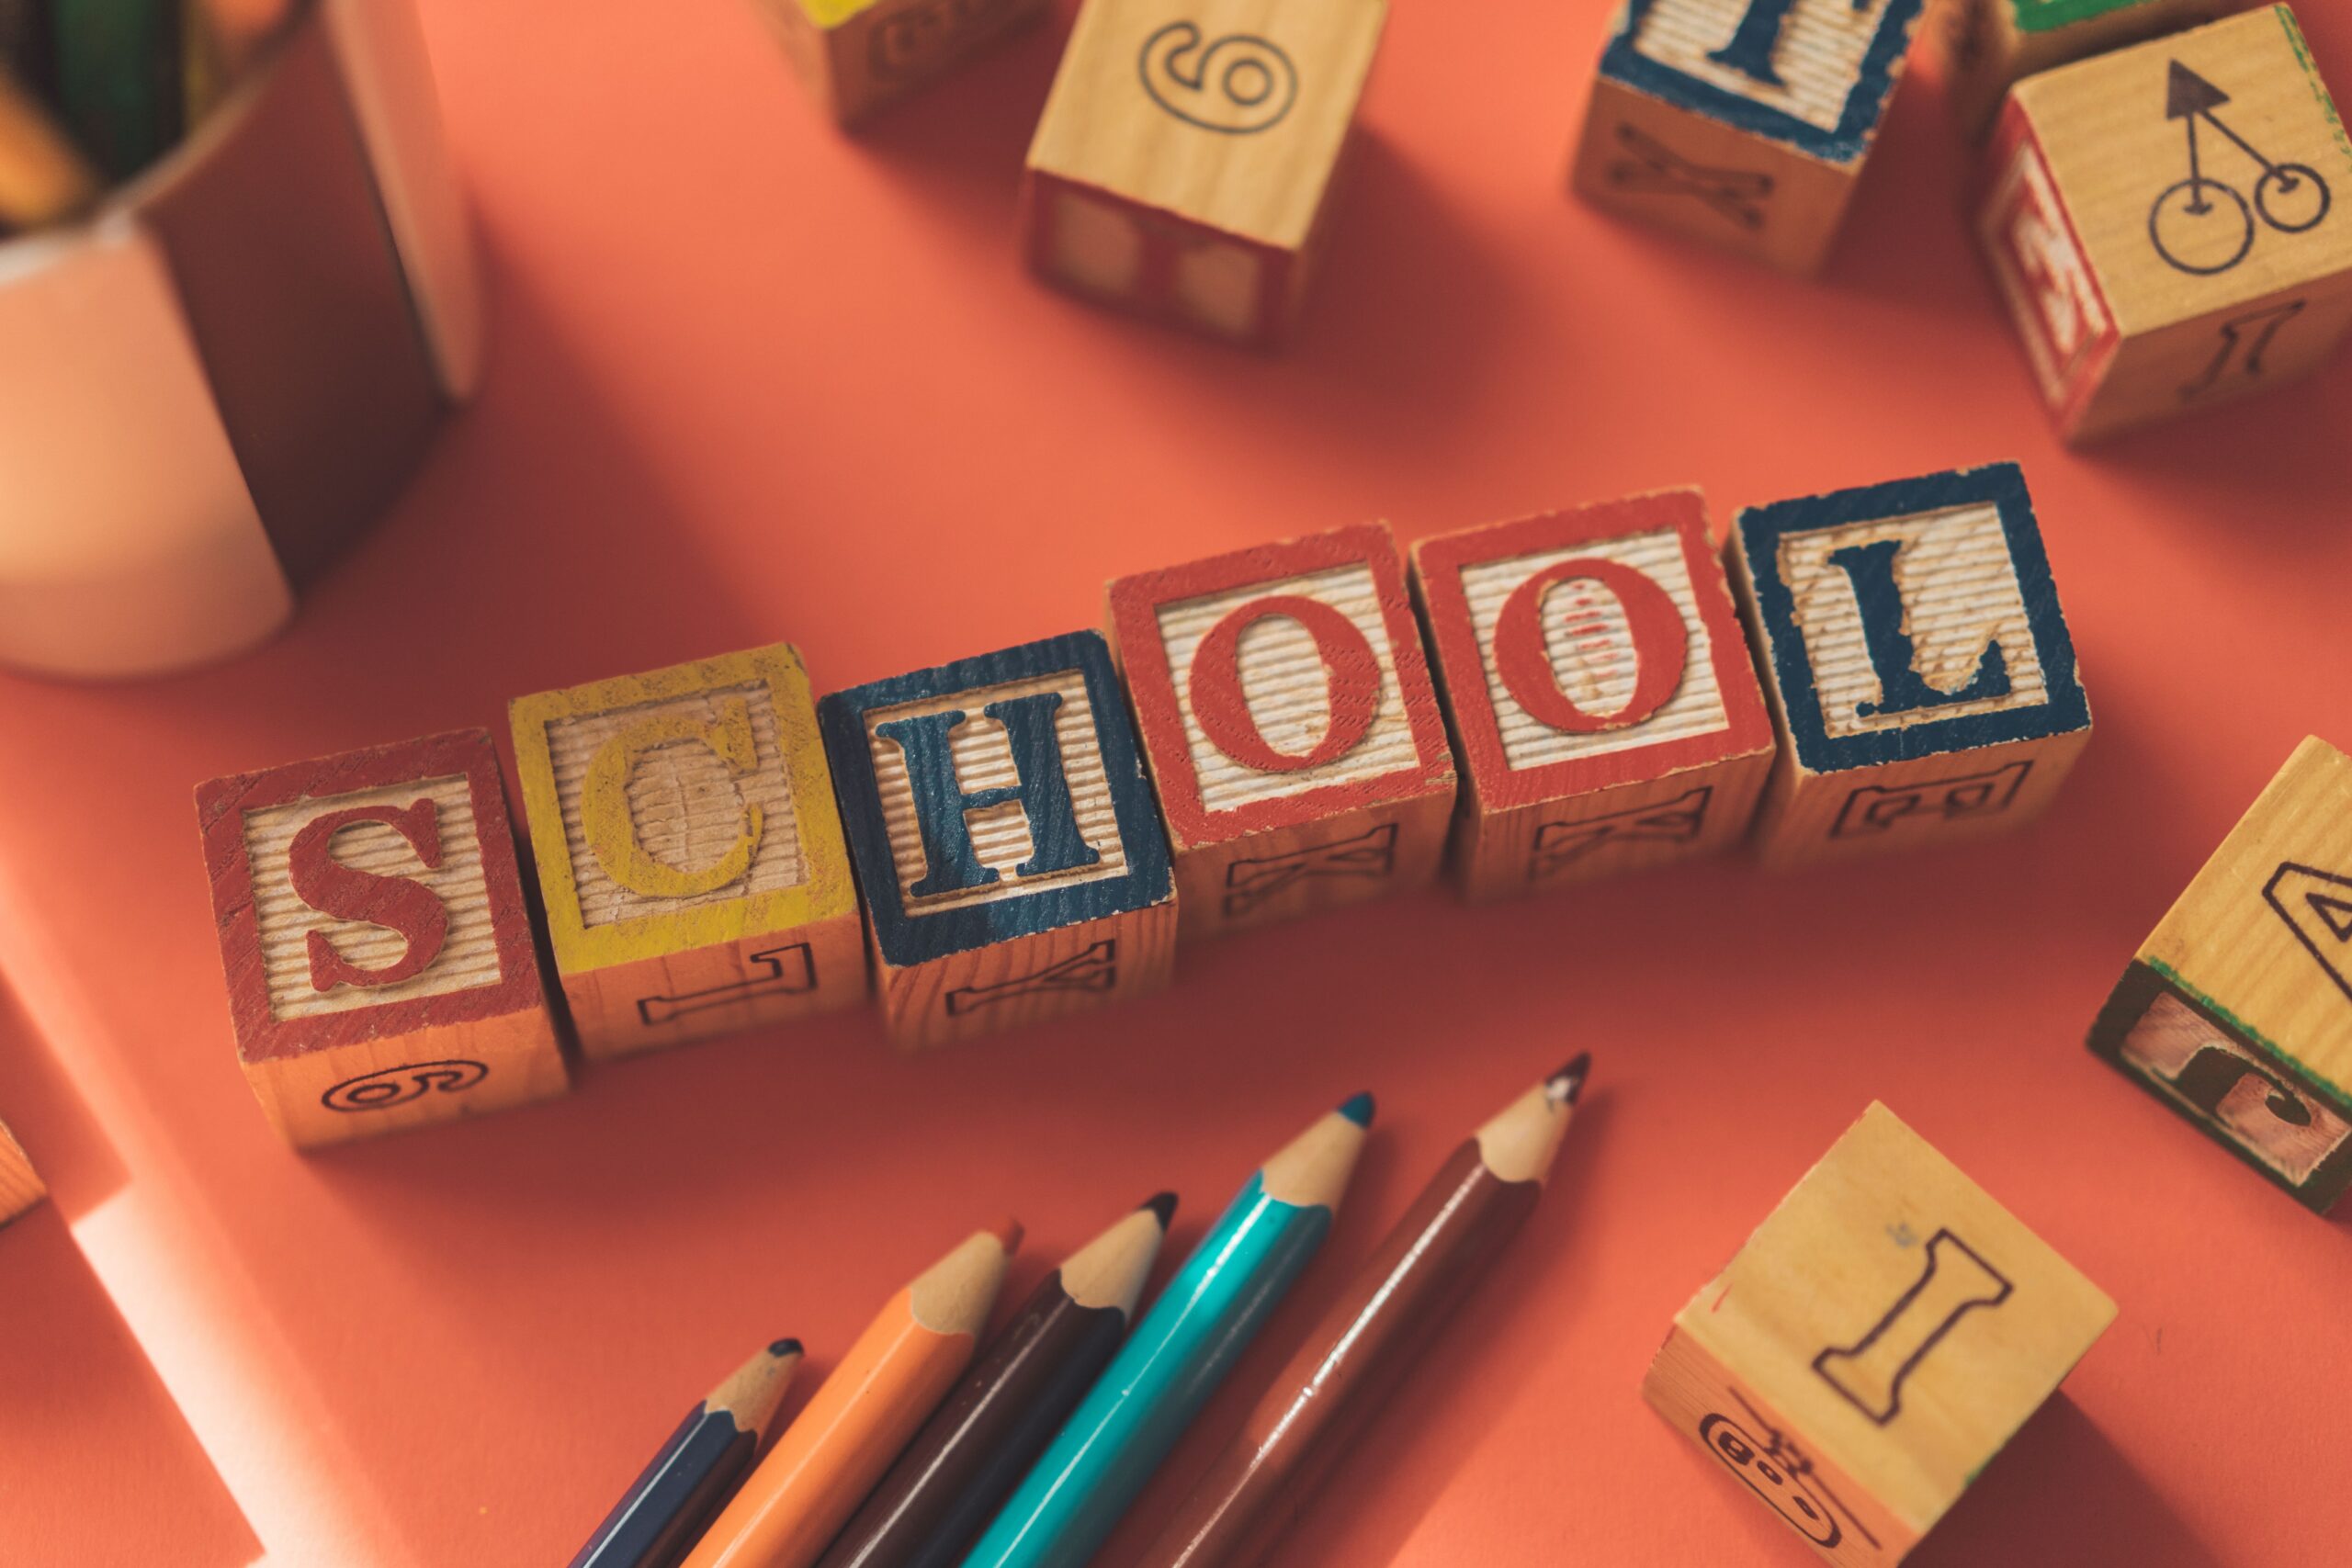 Letter blocks spelling “school”